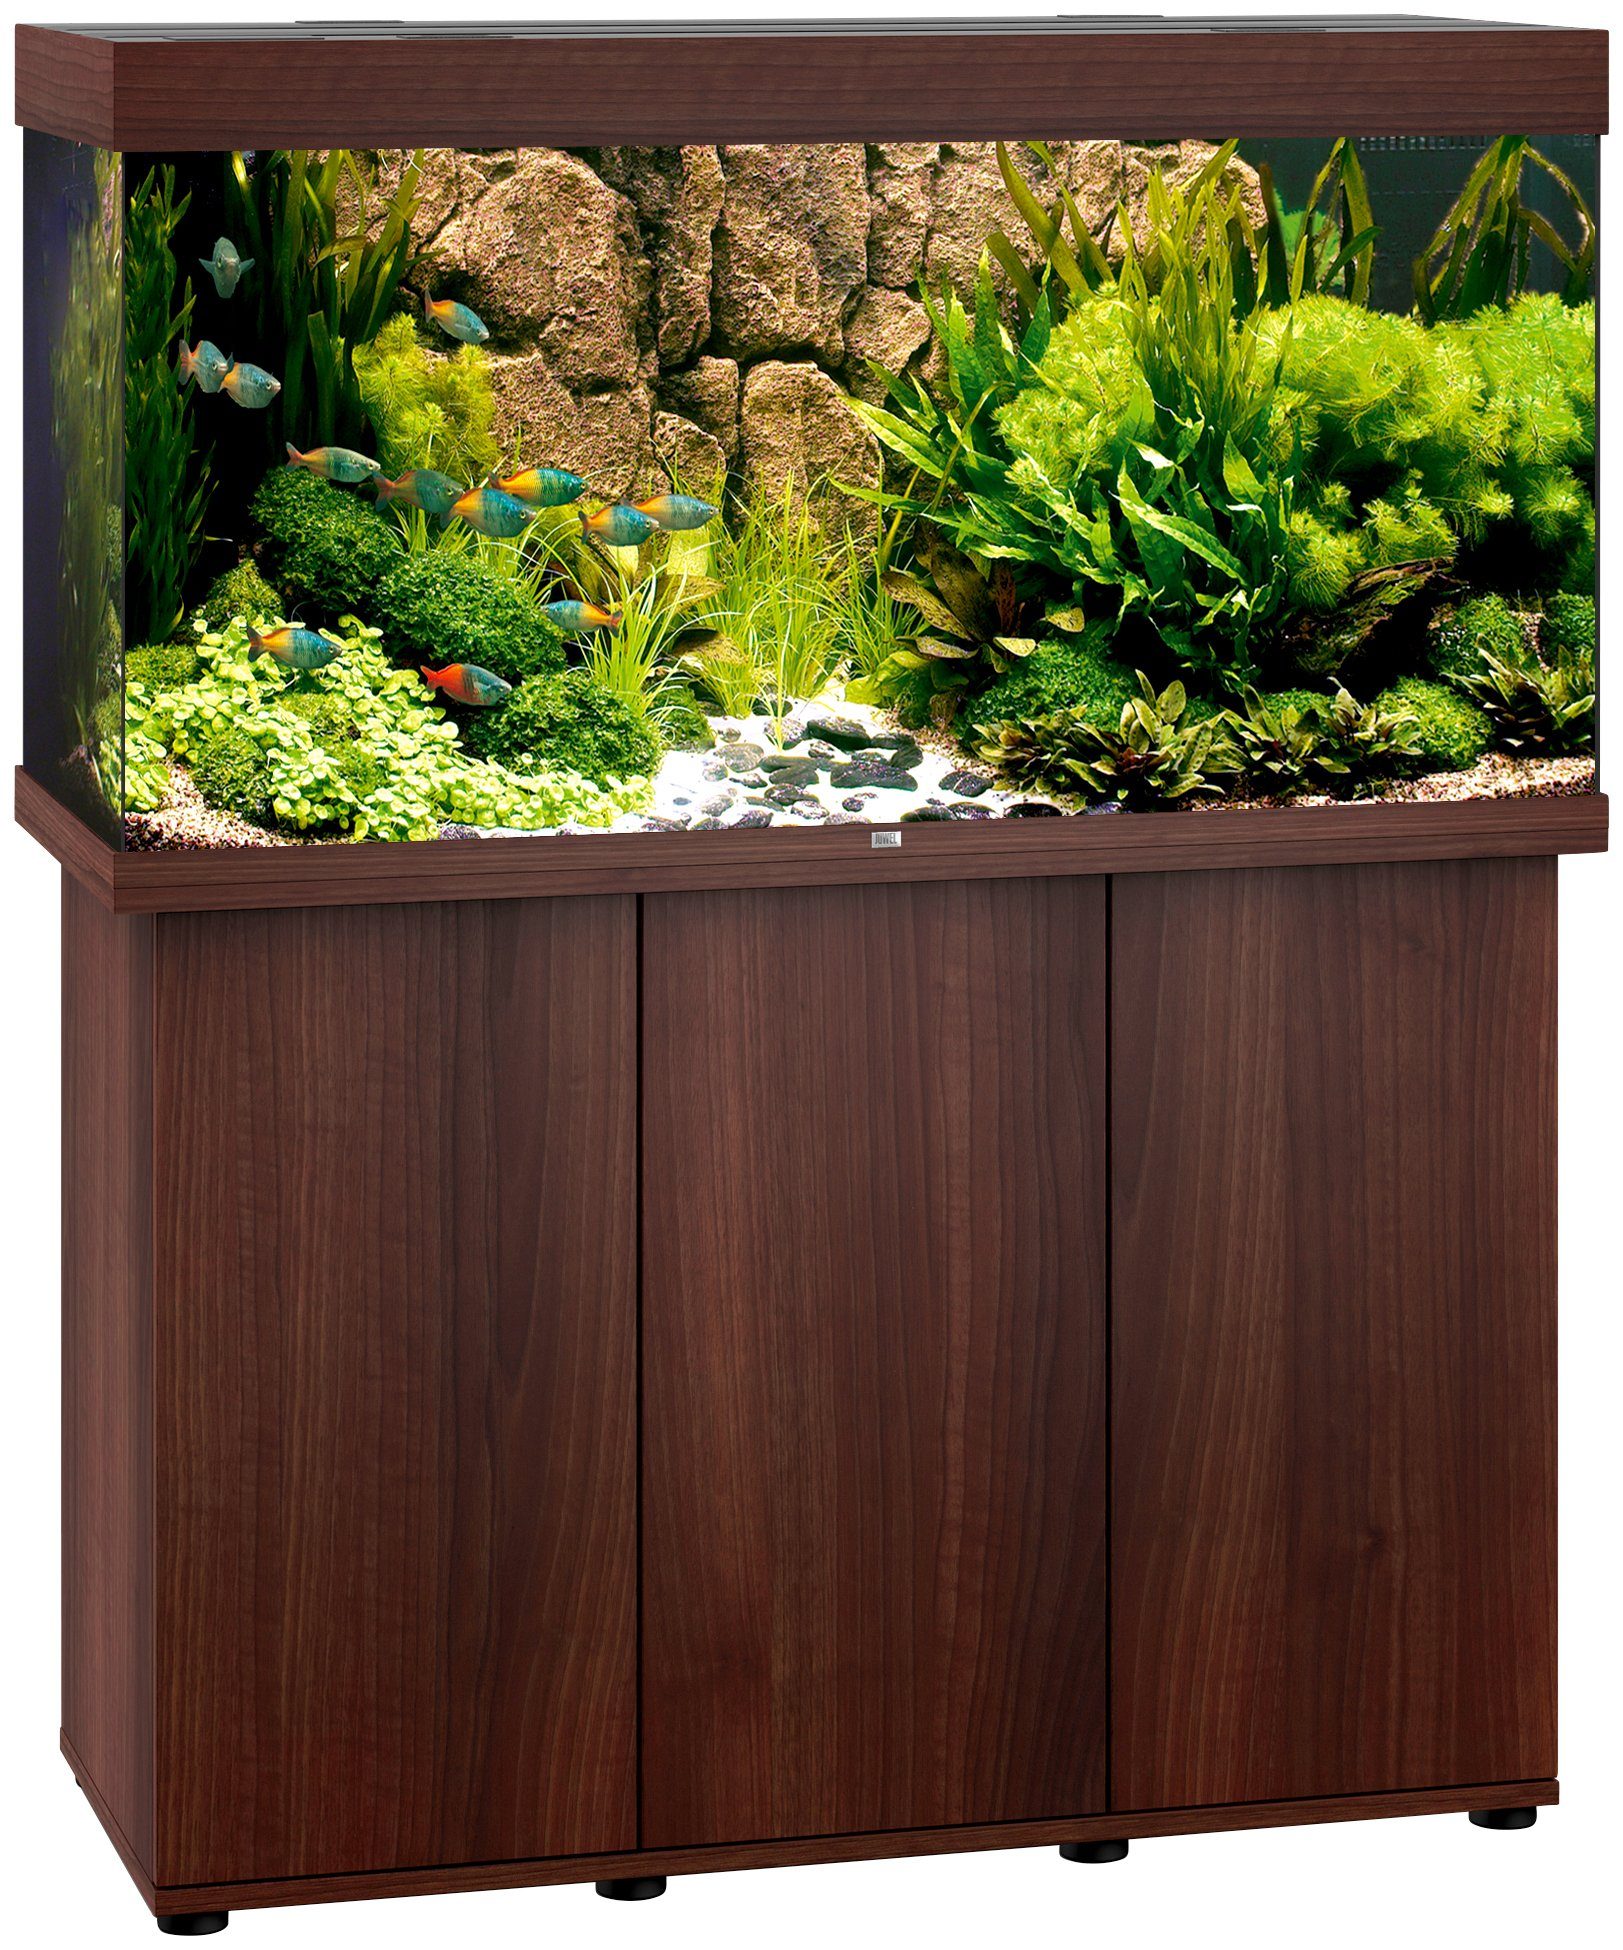 JUWEL AQUARIEN Aquarien-Set »Rio 350 LED«, BxTxH: 121x51x146 cm, 350 l, mit  Unterschrank online kaufen | OTTO